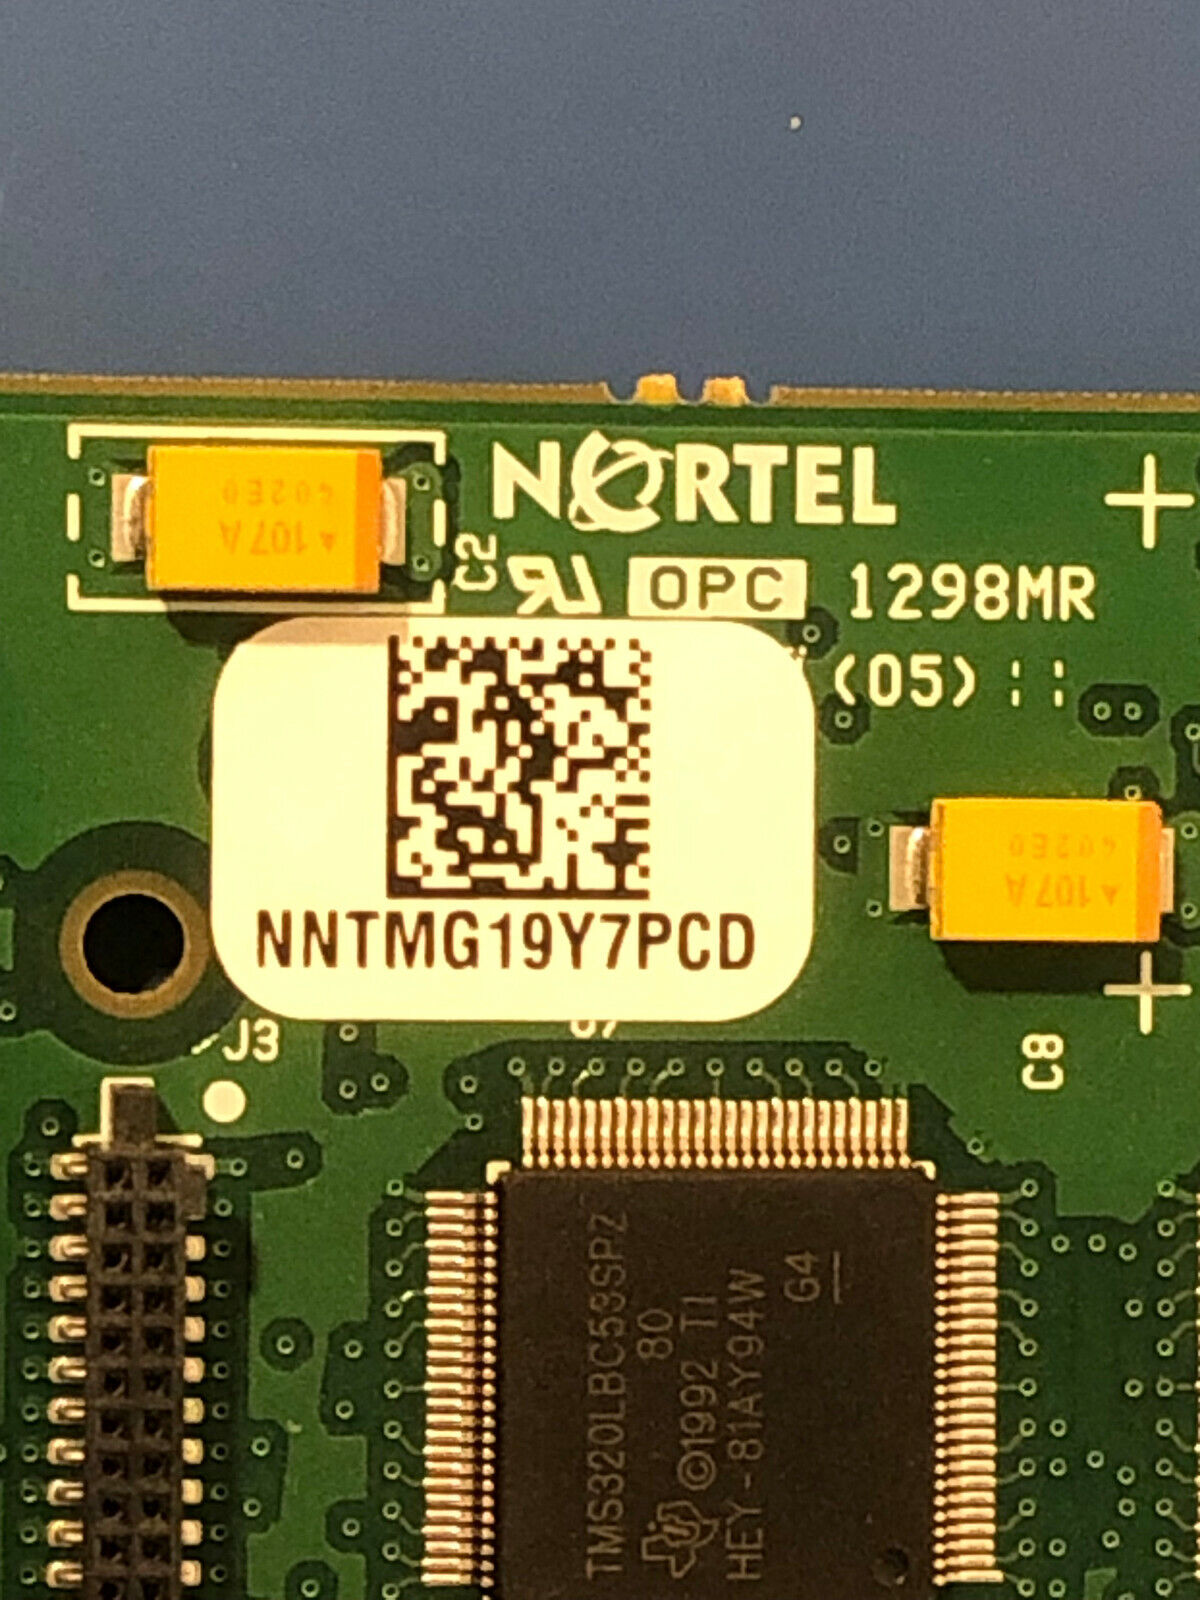 Nortel NTRH40AAE5 DSP PCI card 96 Port 1298MR Call Pilot MPB Board PCI.